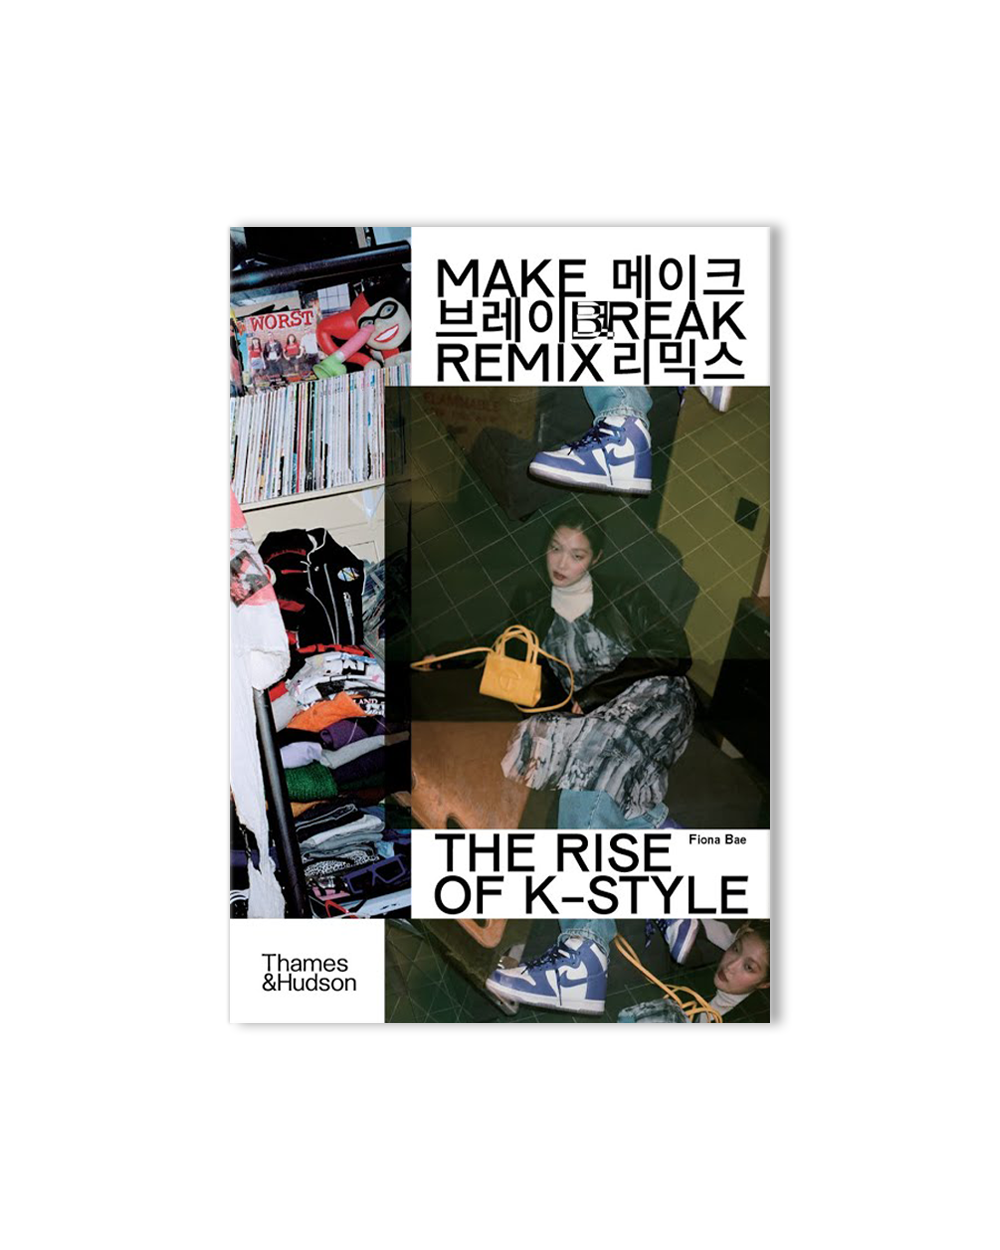 Make Break Remix - The Rise of K-Style